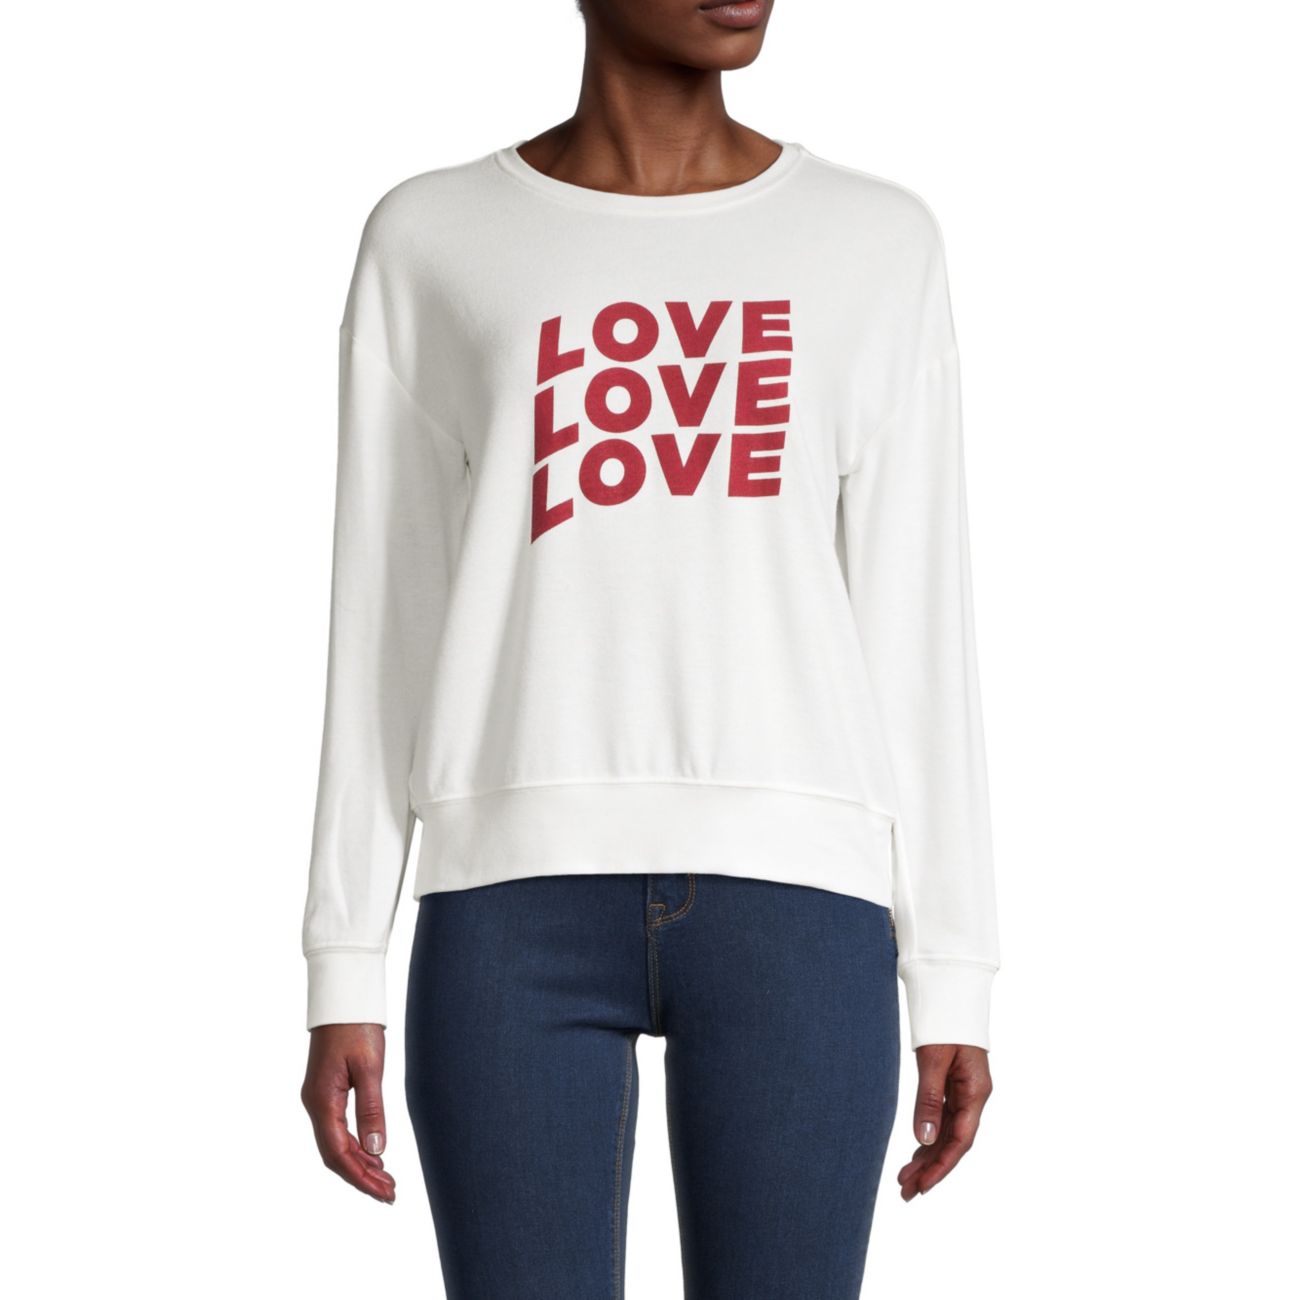 Пуловер с надписью Love Workshop